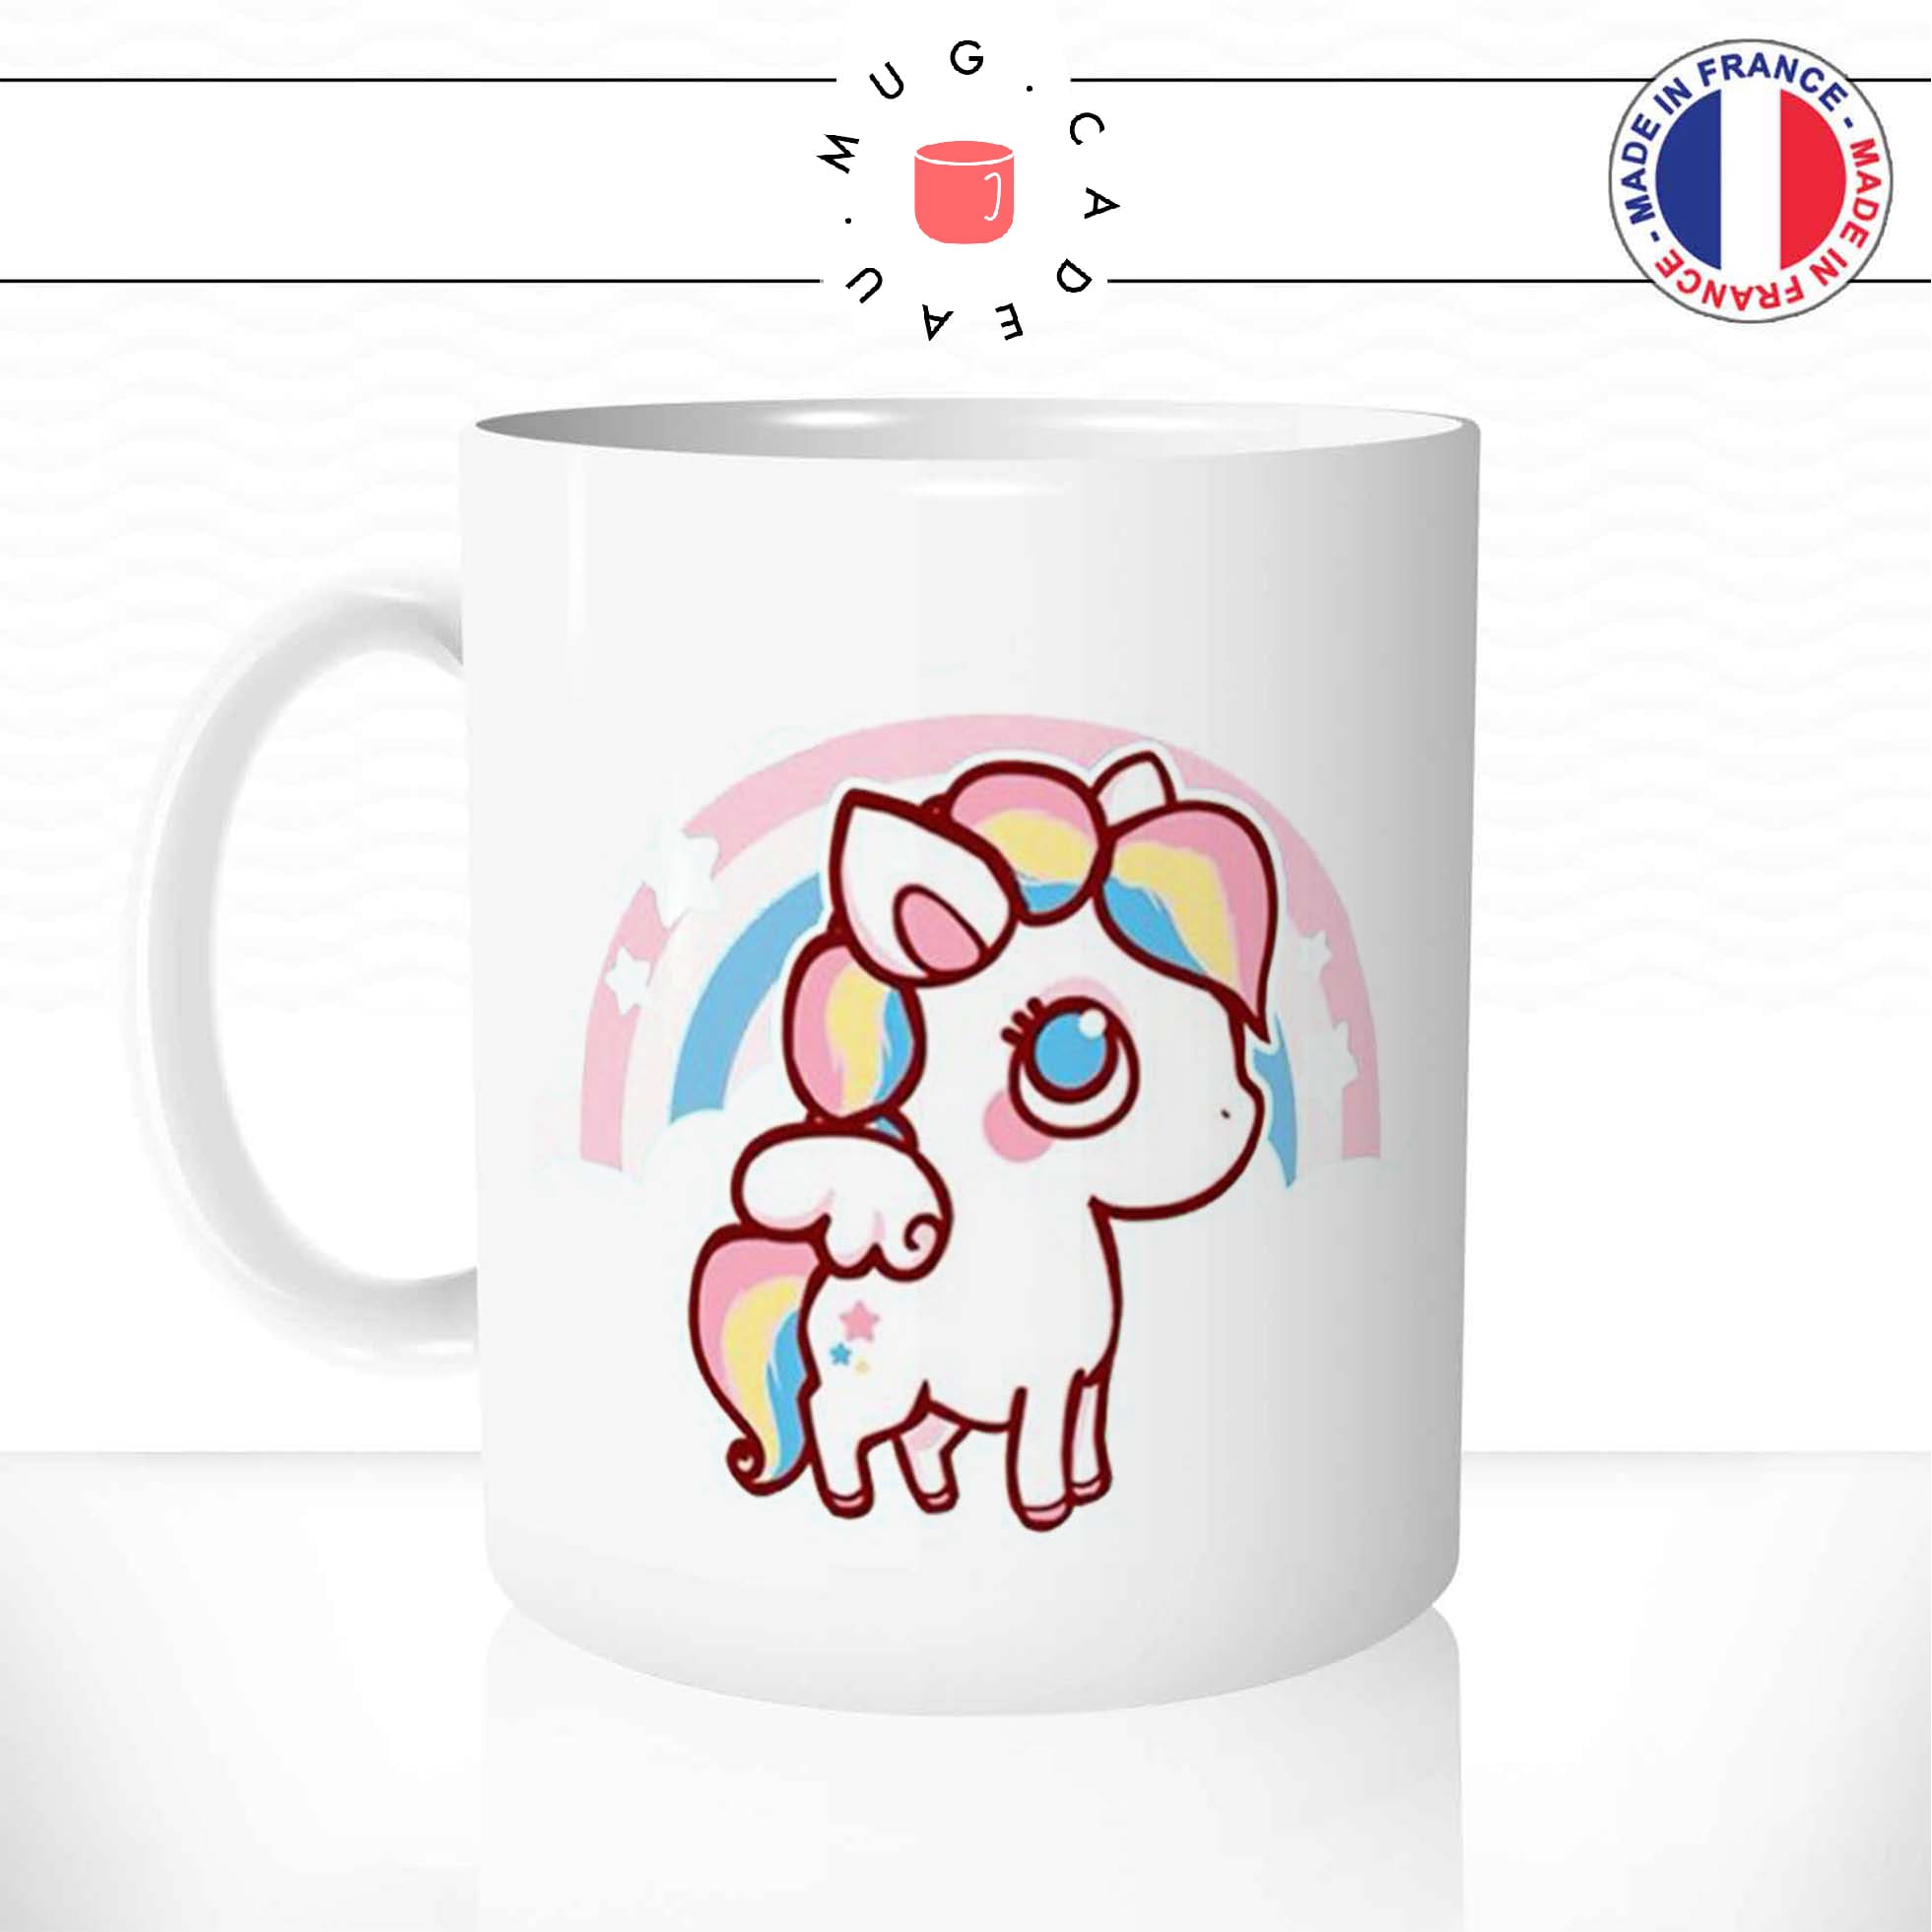 mug-tasse-ref3-licorne-arc-en-ciel-cute-enfant-cafe-the-mugs-tasses-personnalise-anse-gauche-min